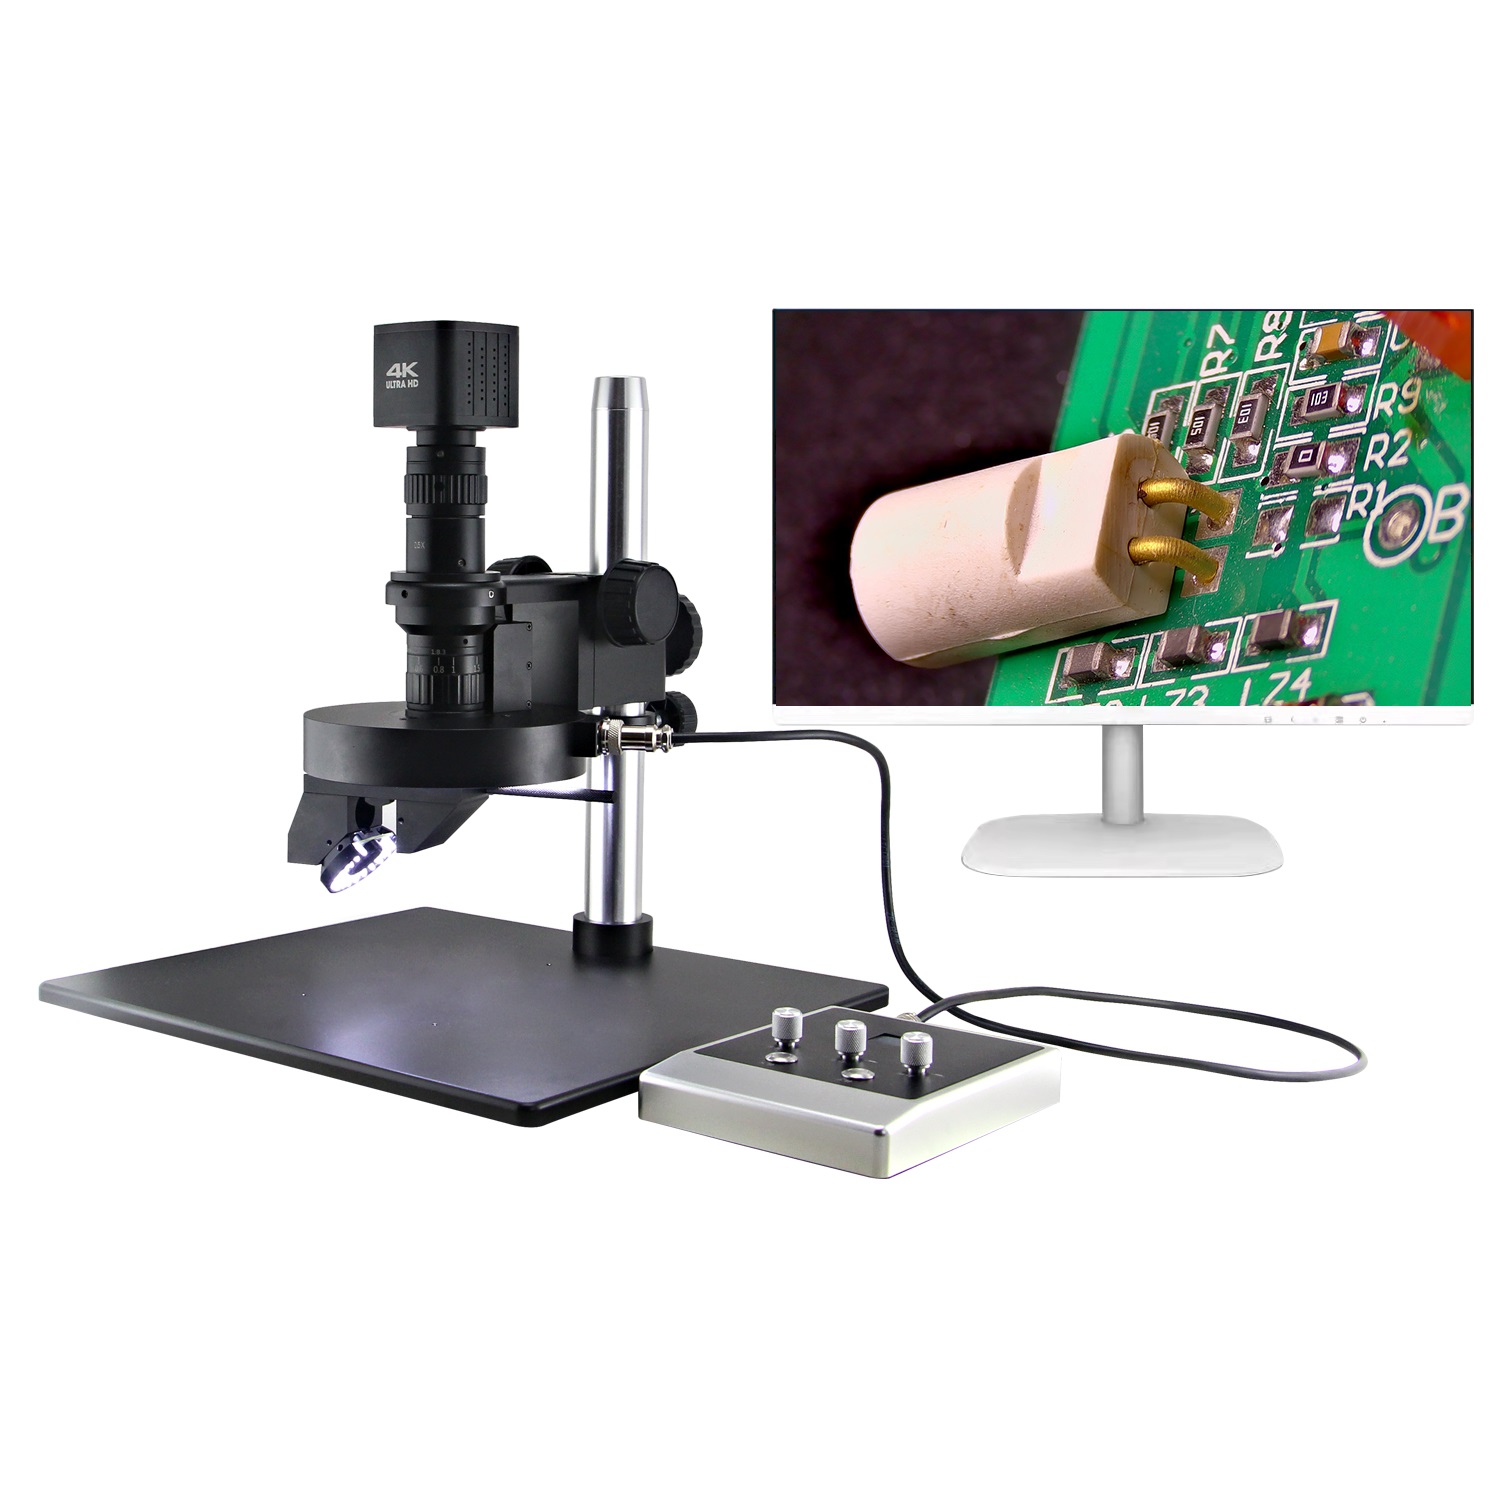 3D mihodinkodina video microscope